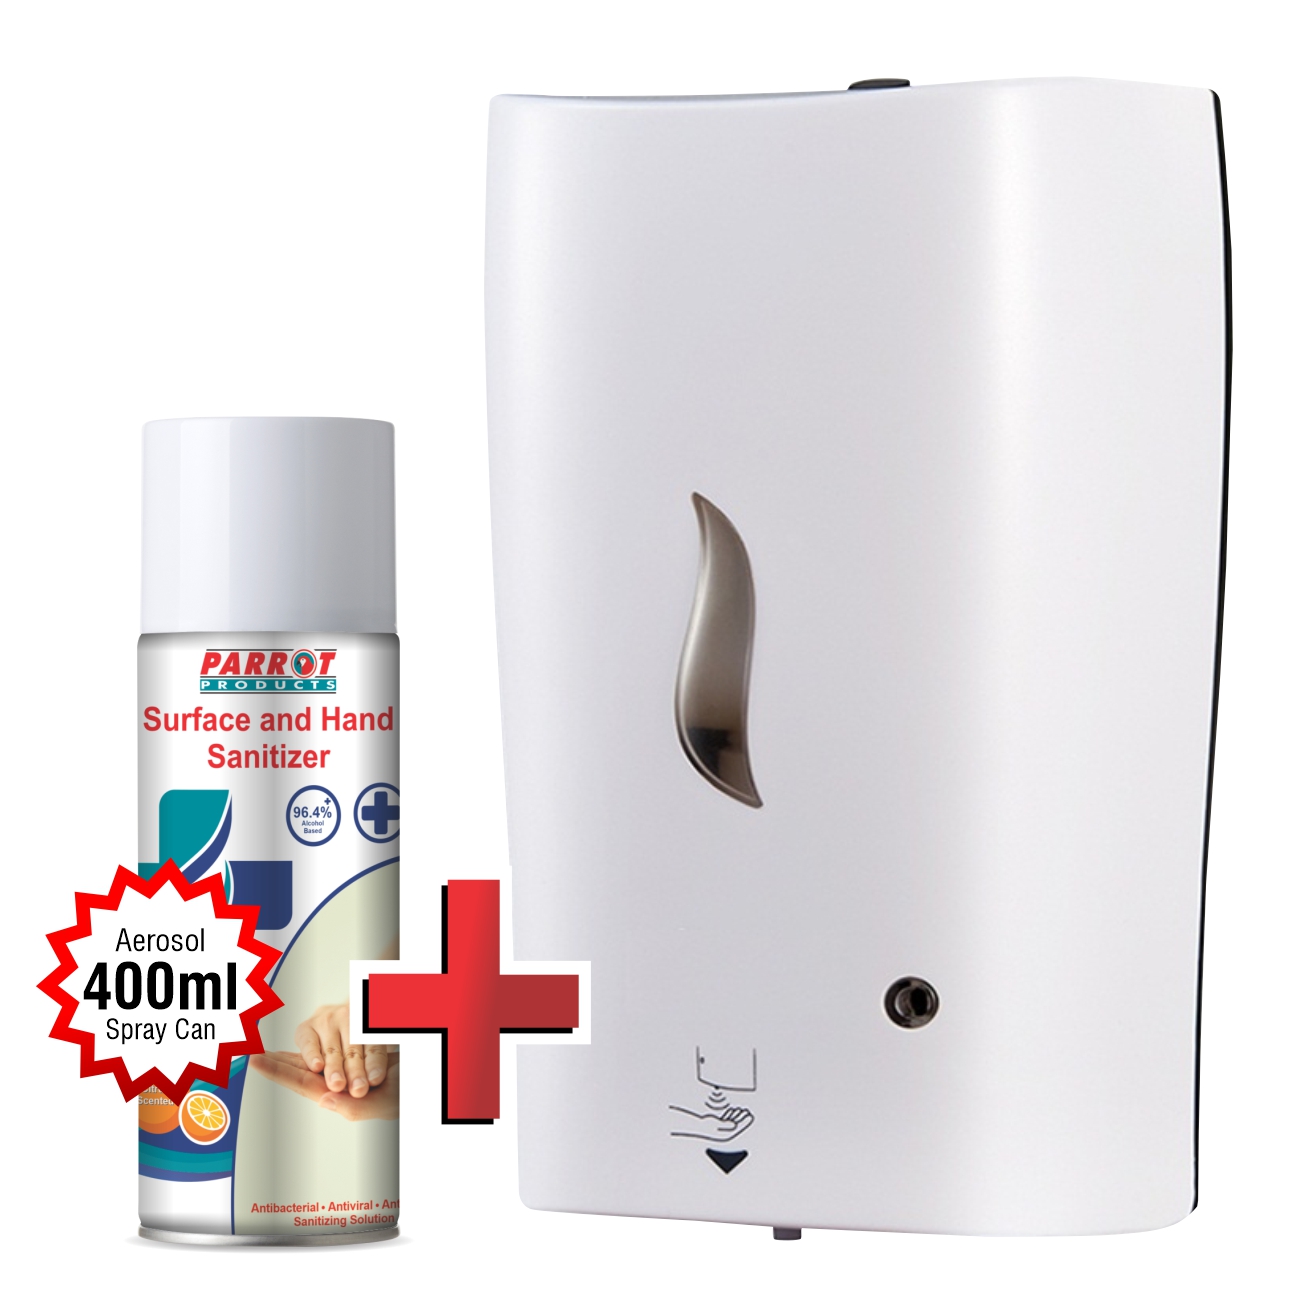 Come Clean Promo Bundle - Auto Sanitizer Dispenser + Aerosol Sanitizer